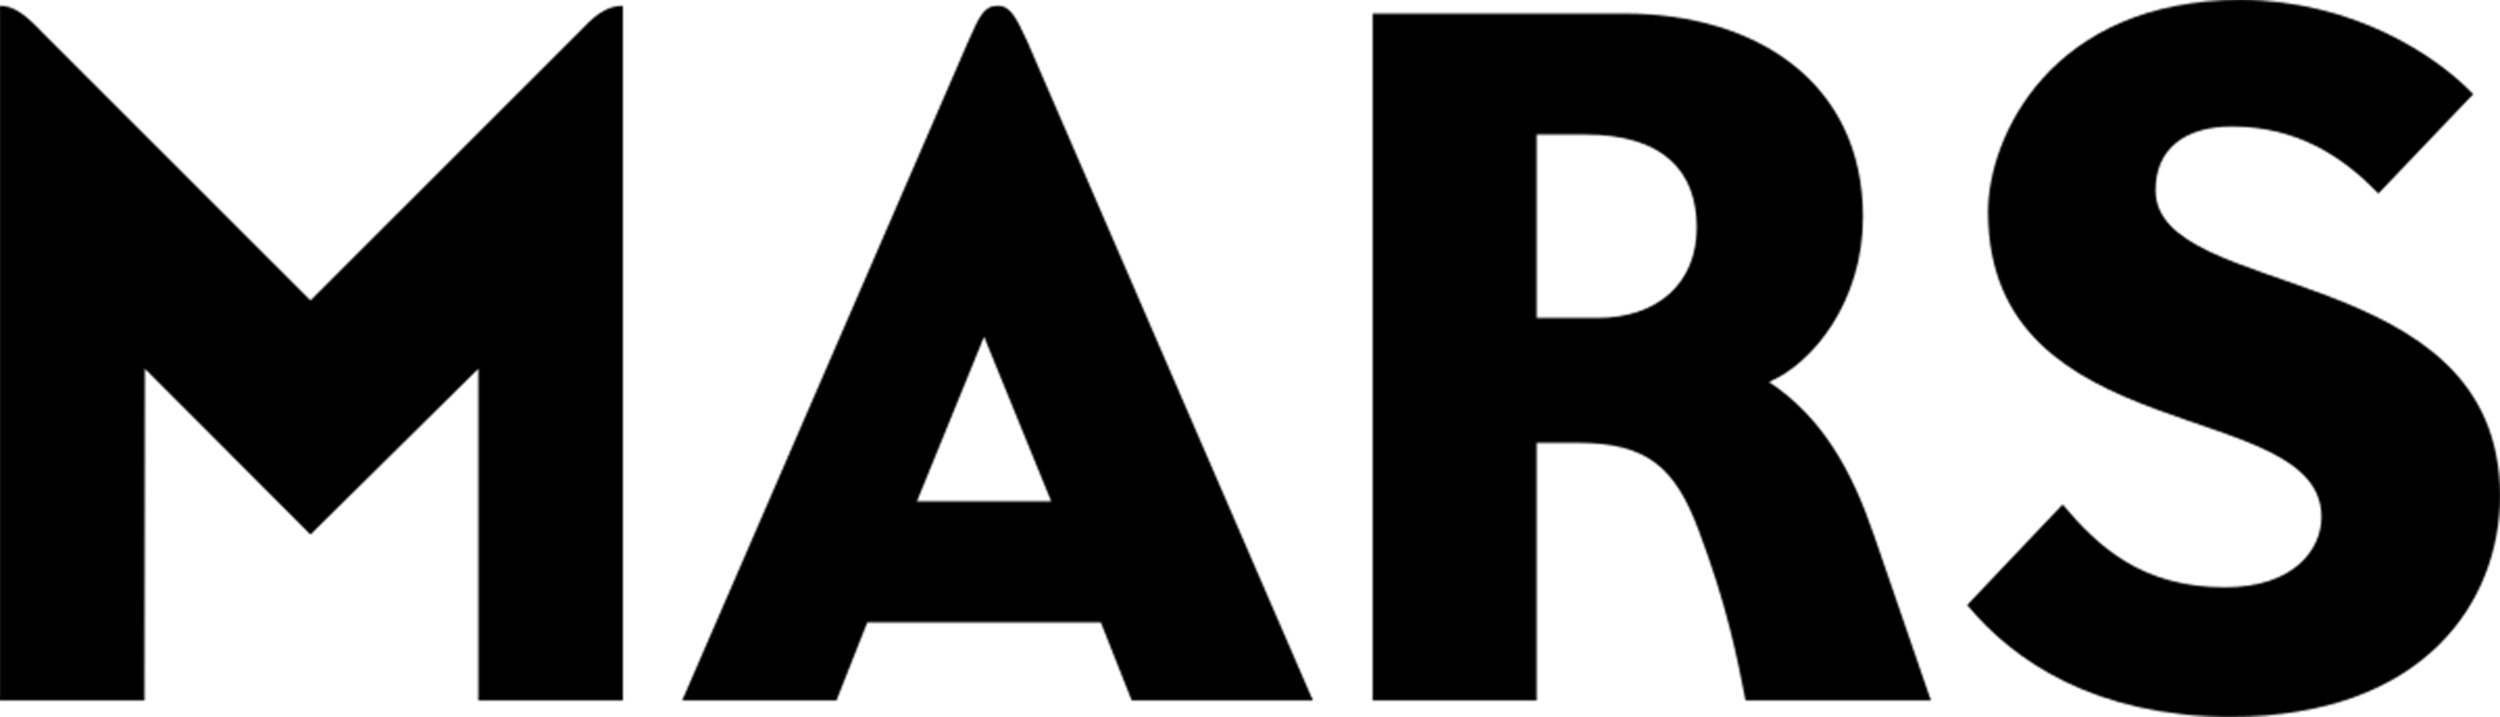 Mars_Inc logo_2019_BLACK.png